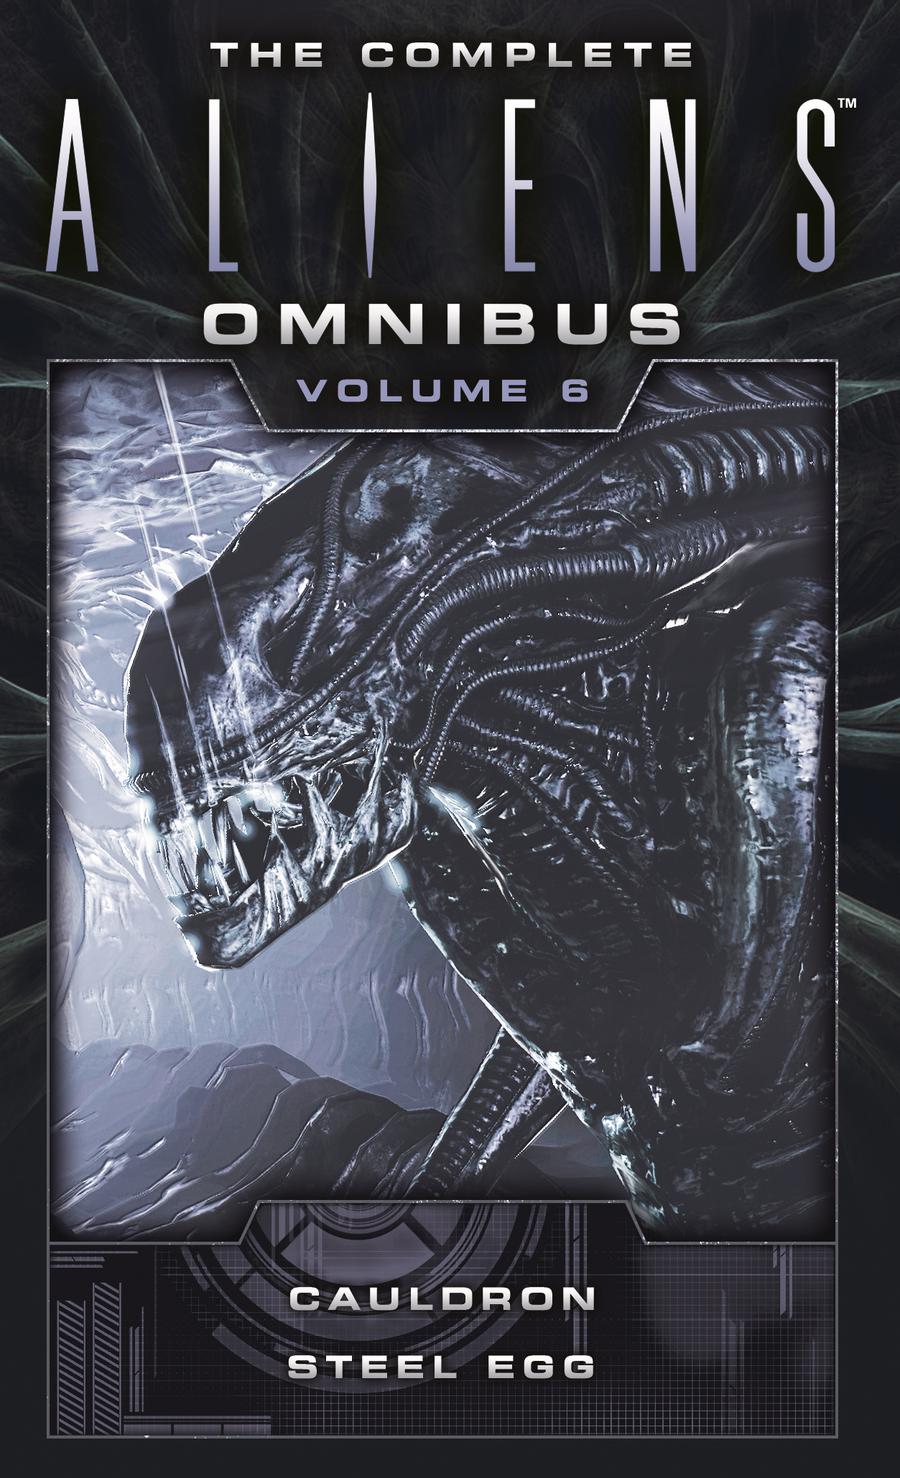 Complete Aliens Novel Omnibus Vol 6 Cauldron & Steel Egg MMPB